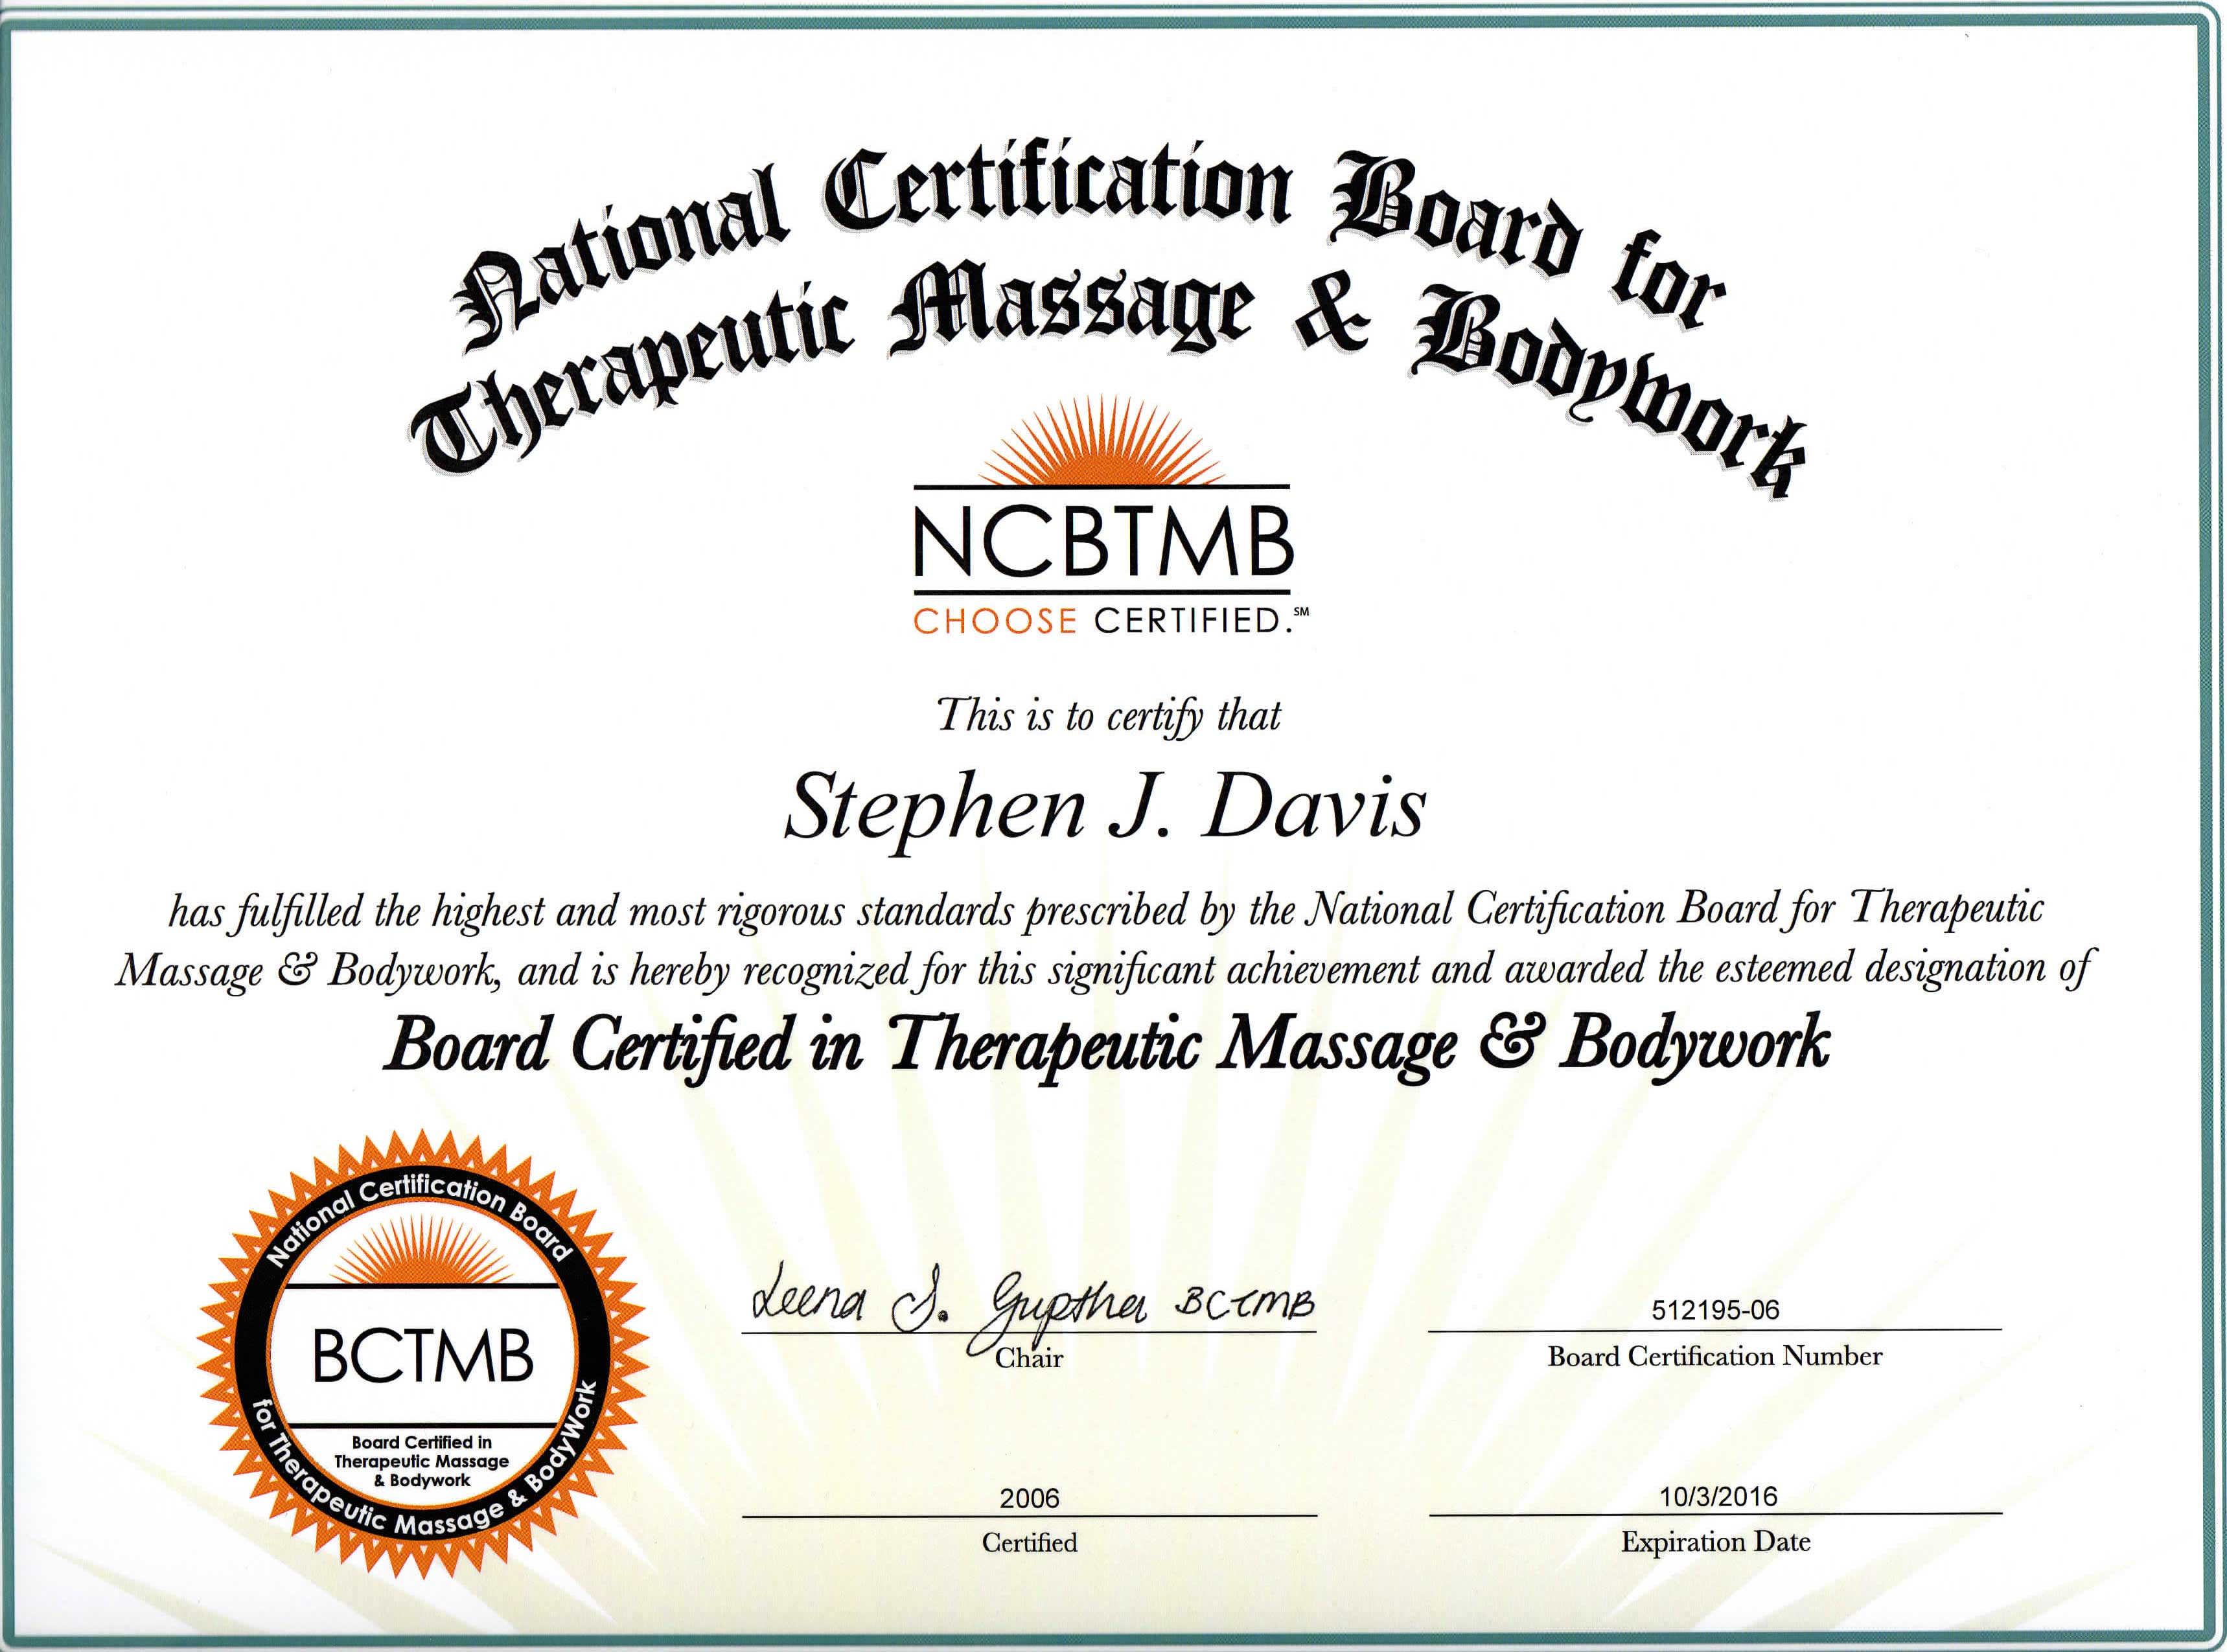 Steve Davis, Board Certified, Therapeutic Massage and Bodywork, BCTMB 512195-06